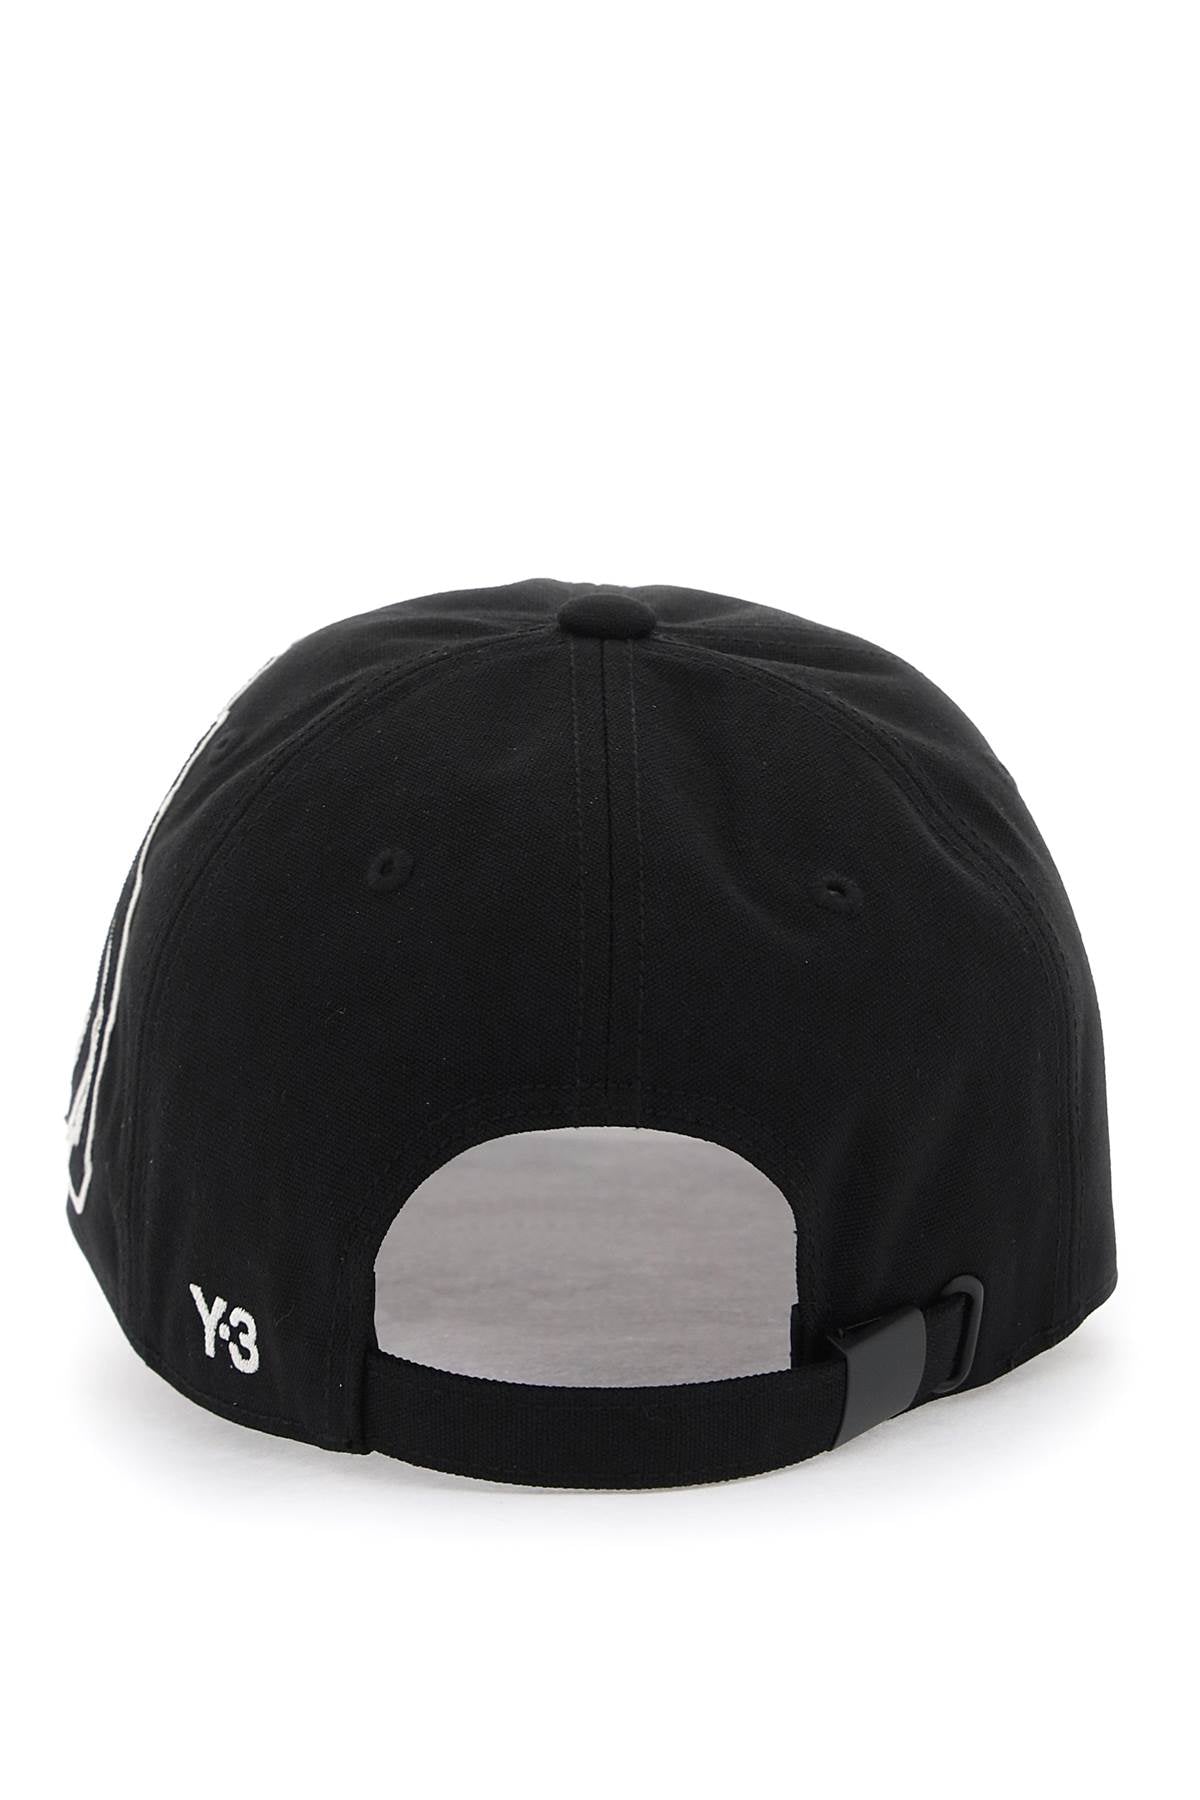 Y-3 cappello baseball con patch logo morphed-2